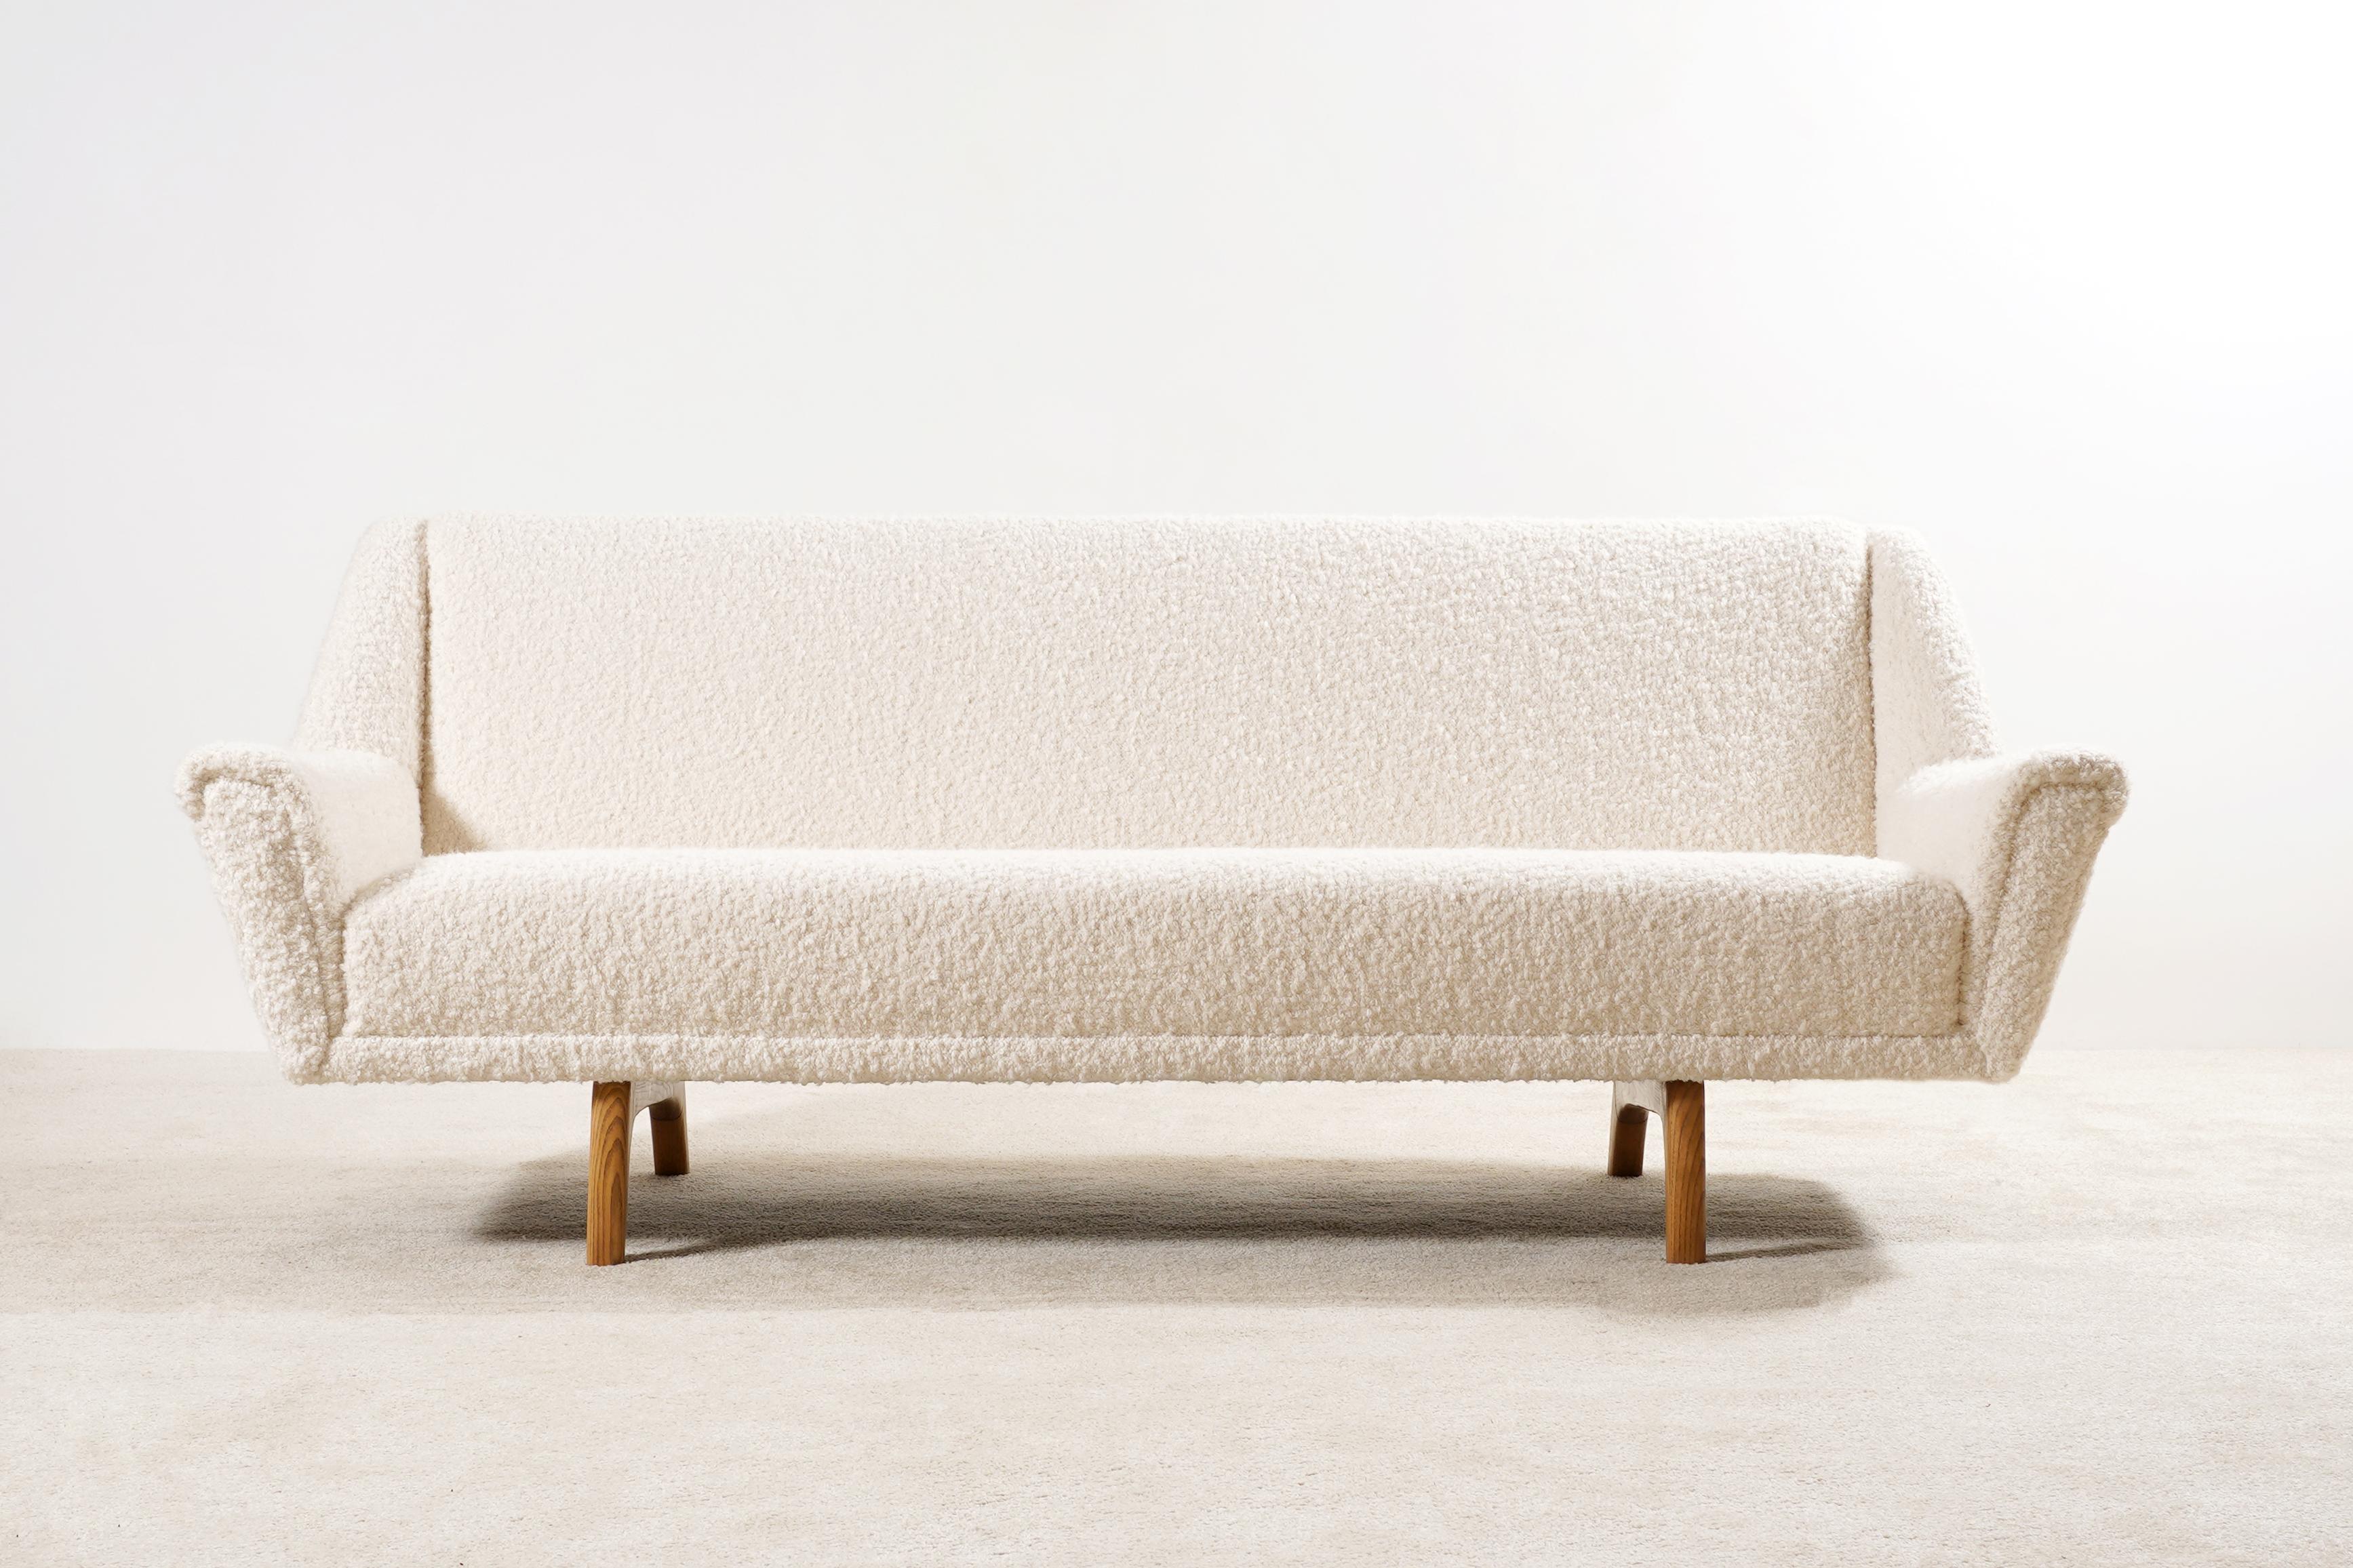 Scandinavian Modern Three-Seat Danish Sofa, Original Piece from the 1960s Newly Upholstered